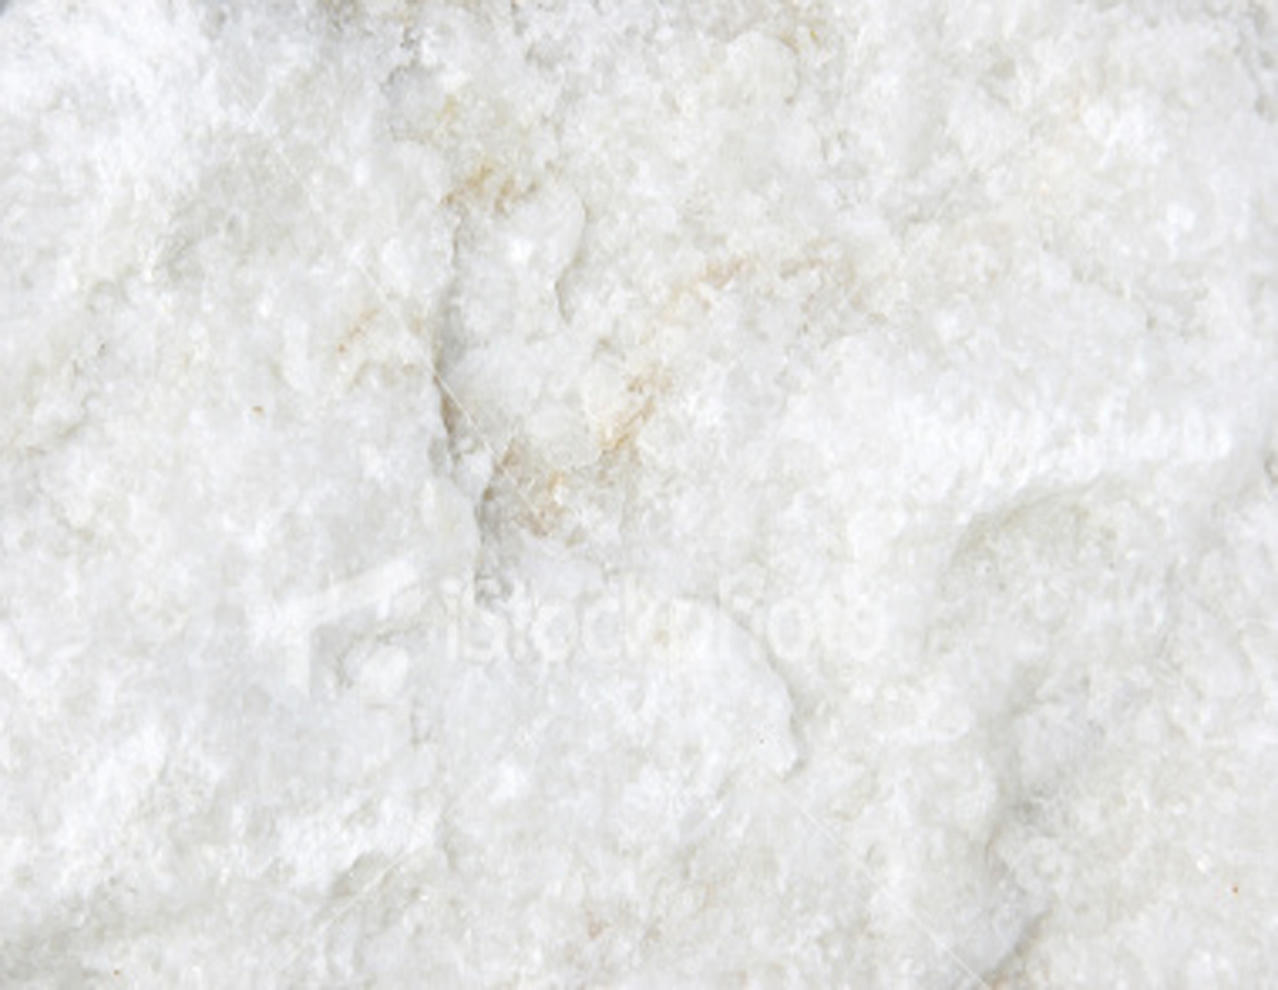 White Marble Texture Background Photo